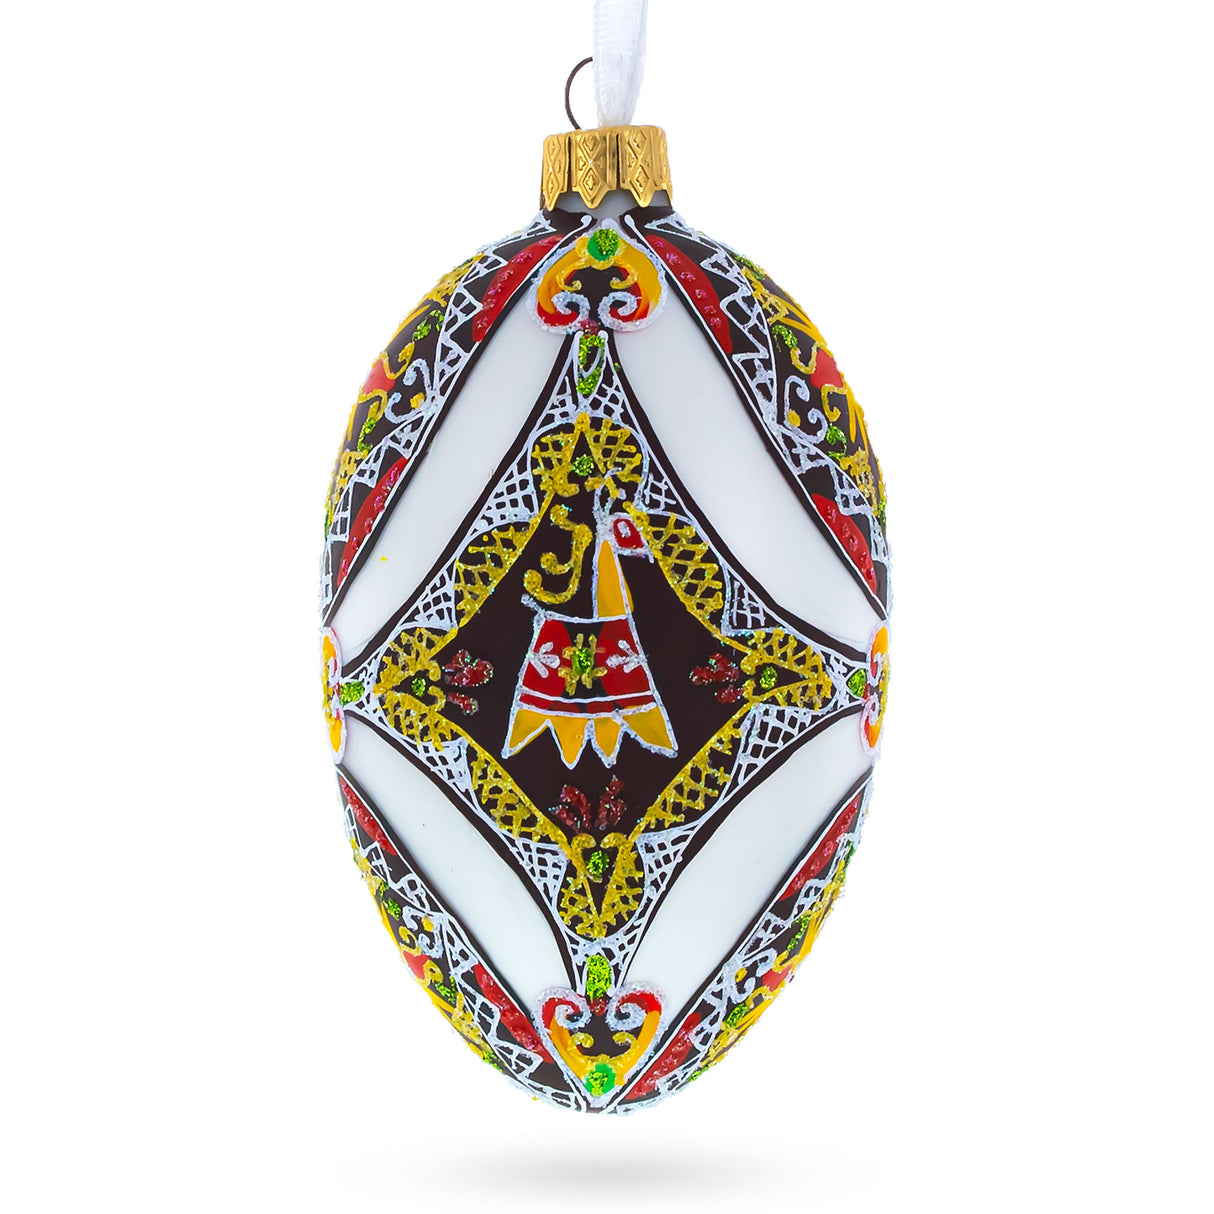 The Horse Ukrainian Glass Egg Ornament 4 Inches in Multi color, Oval shape